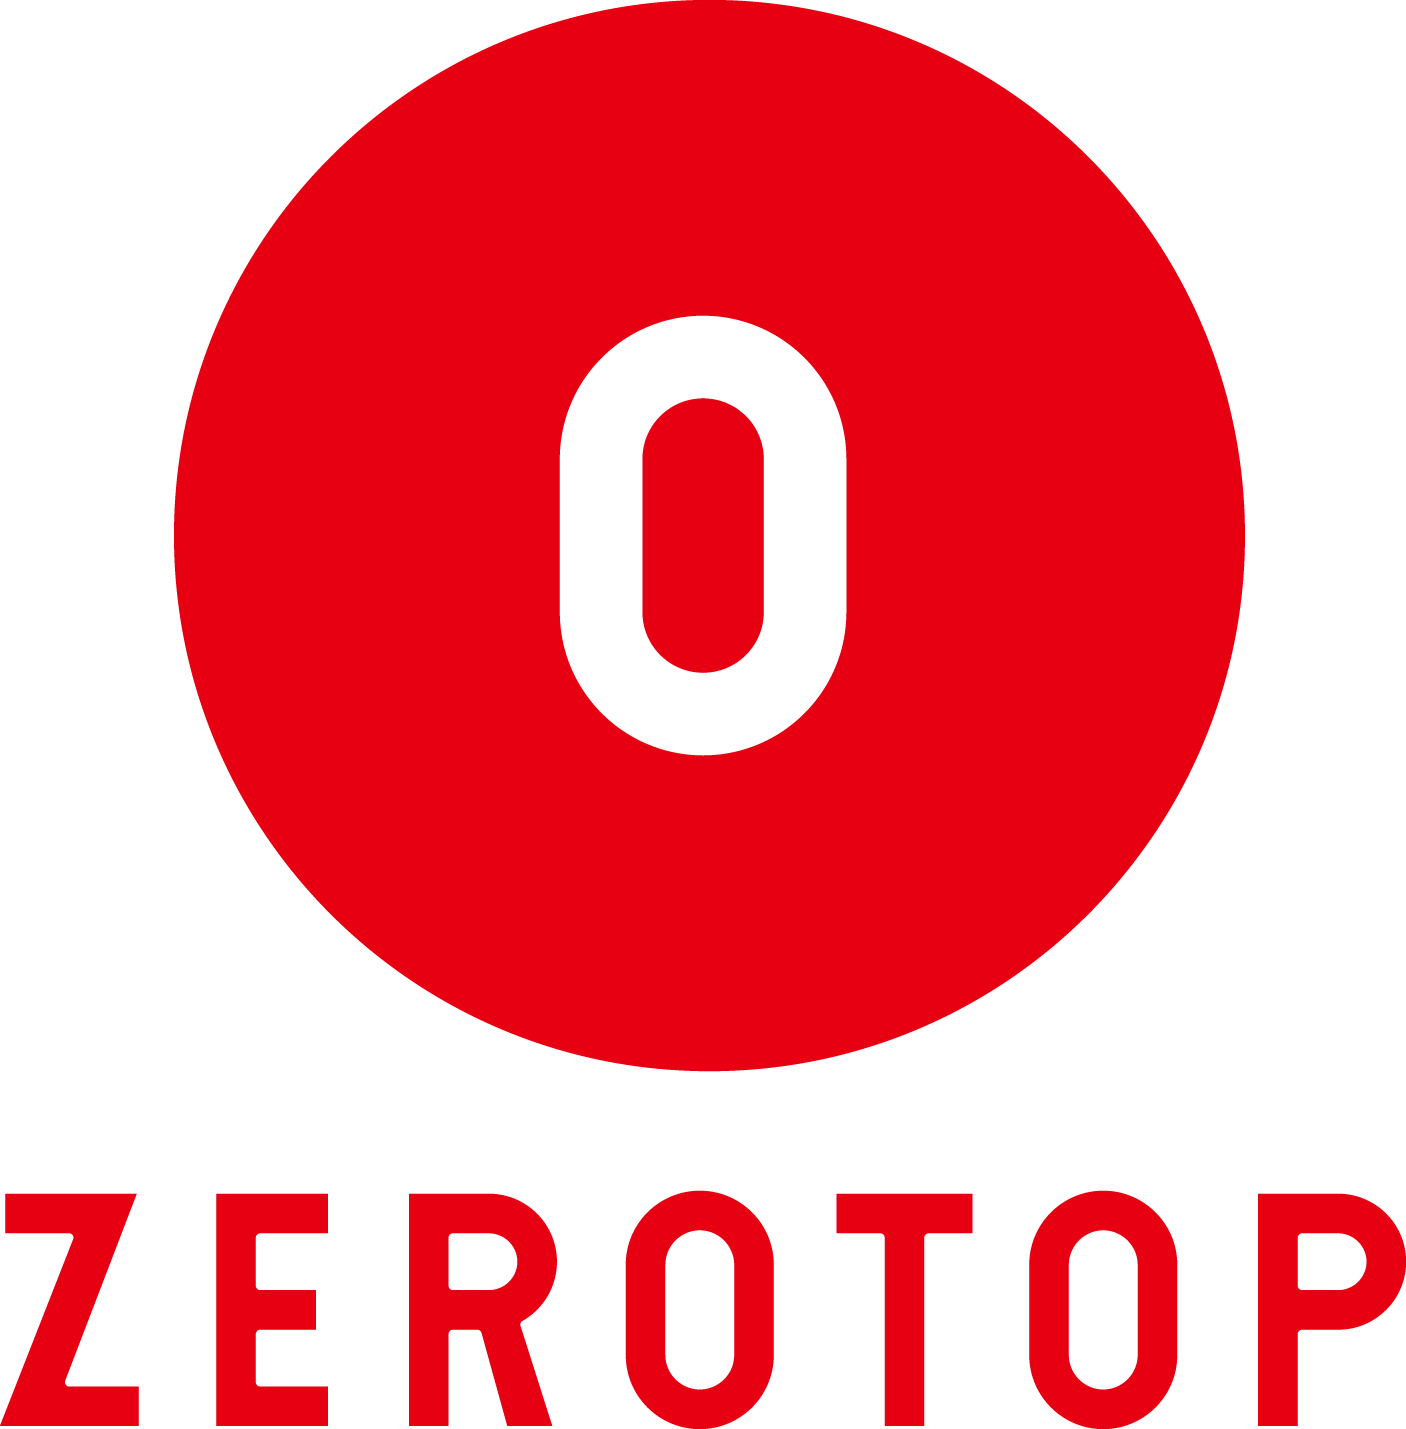 株式会社ZEROTOP